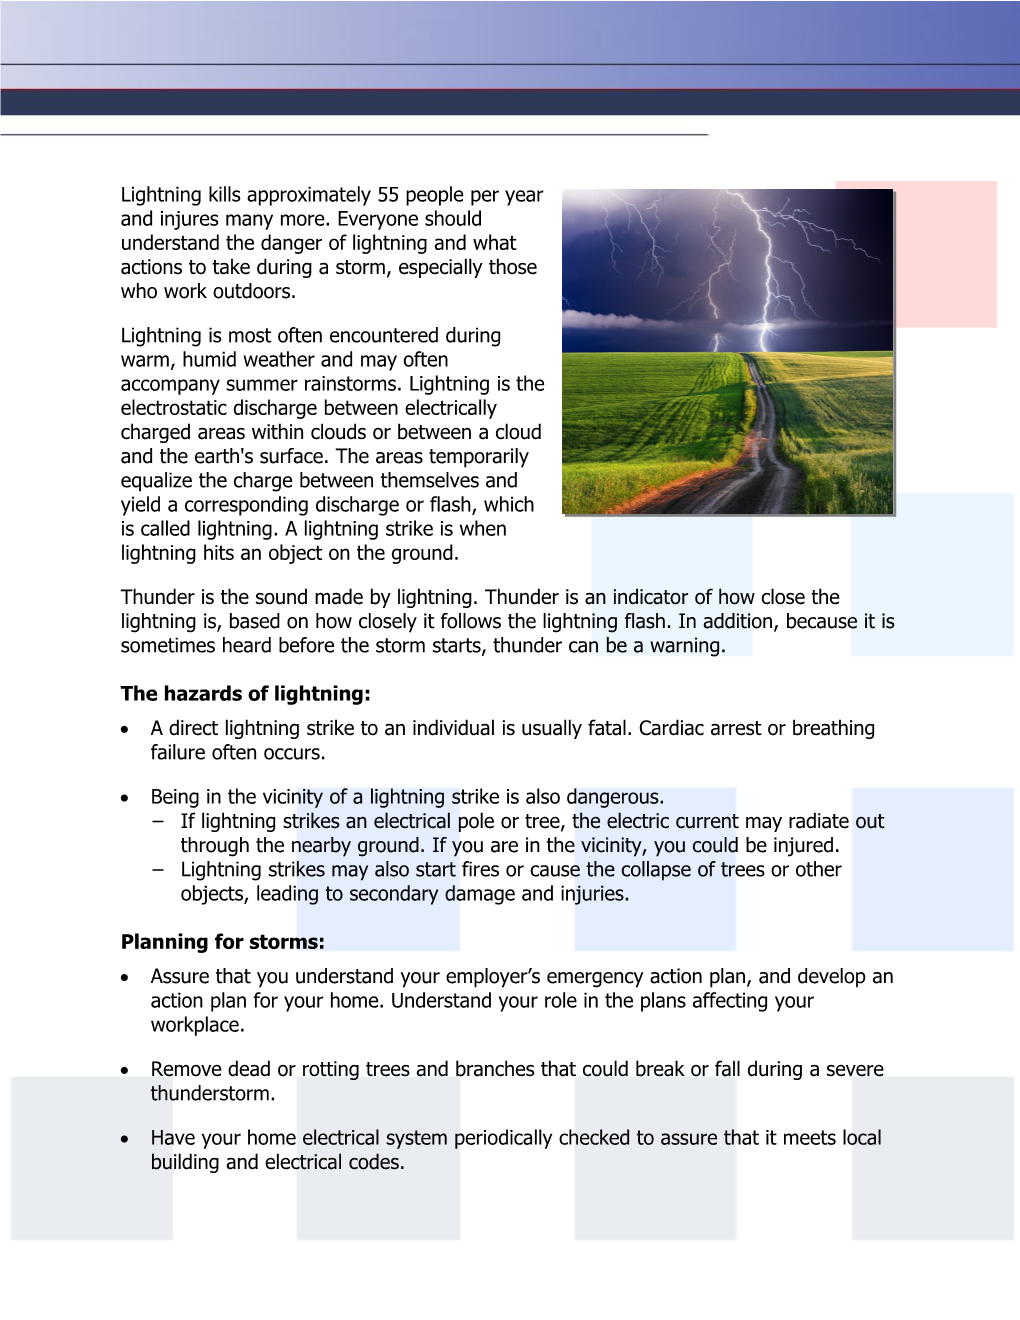 The Hazards of Lightning